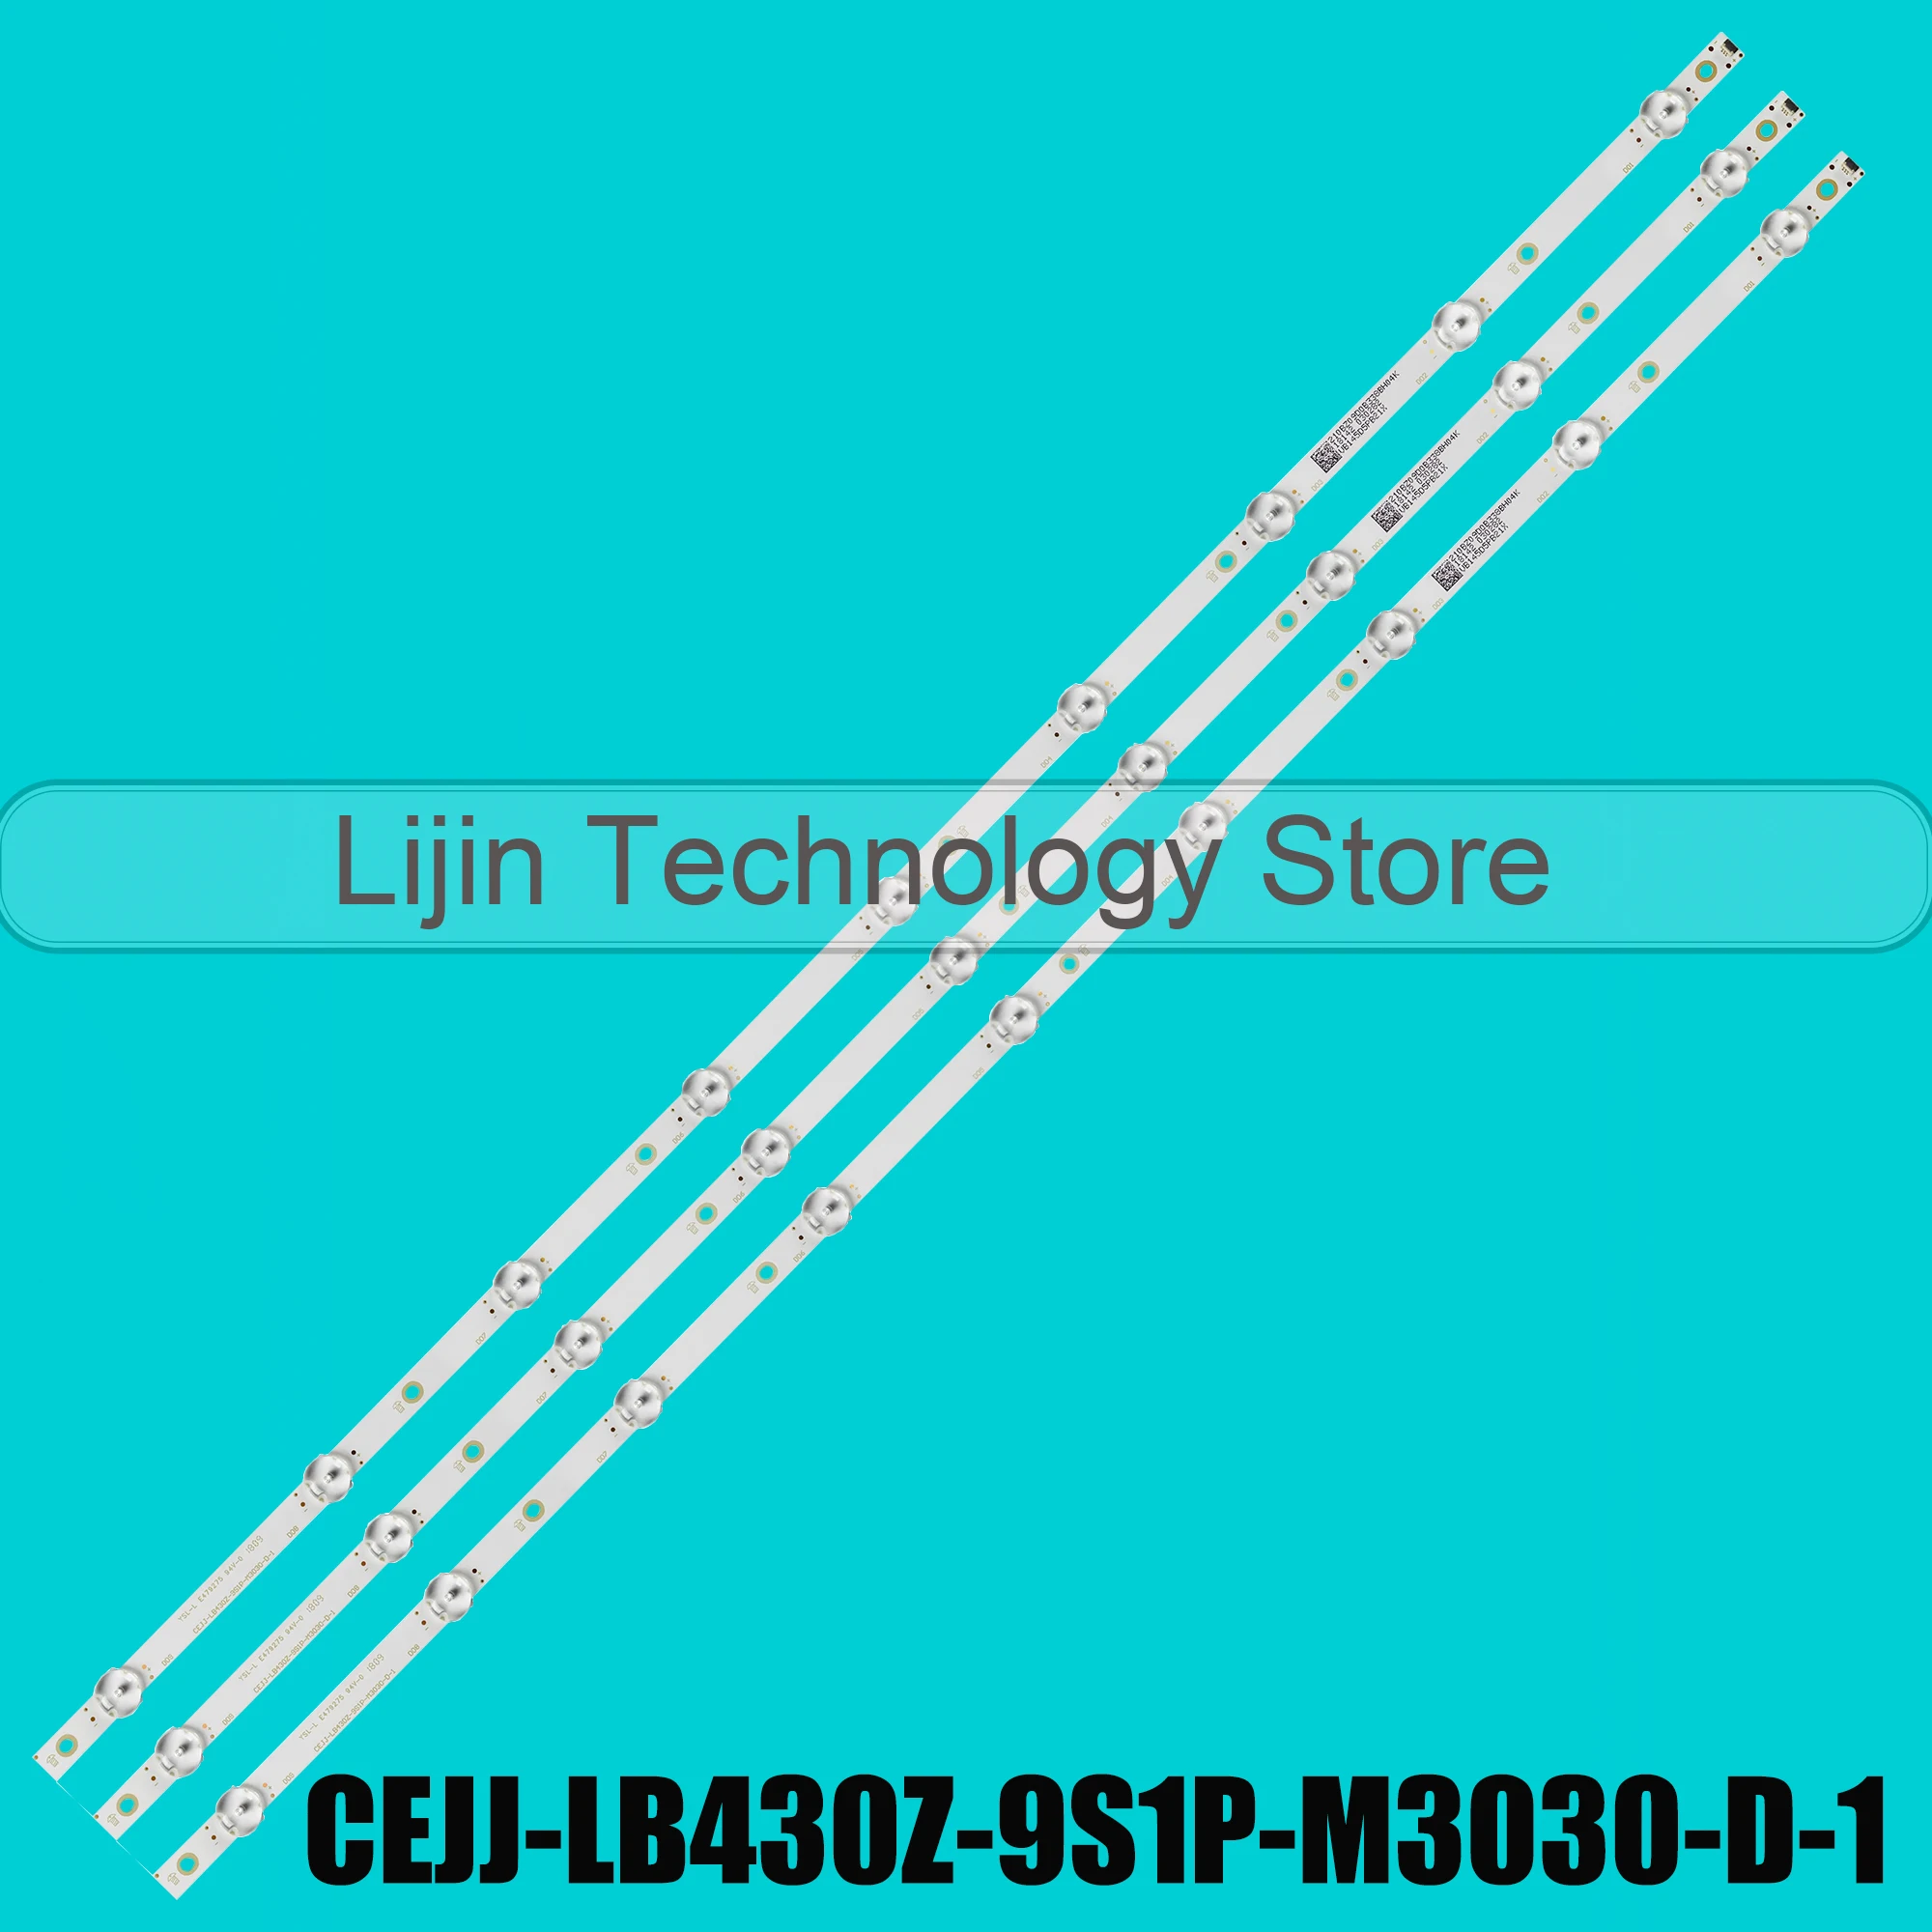 

LED strip For CEJJ-LB430Z-9S1P-M3030-F-2 D-1 43HFF3953 43PFF3212 43PFF3933 43PFF5252 43S5195 43PFF5212 43S5295 43PFG5813 43S5195